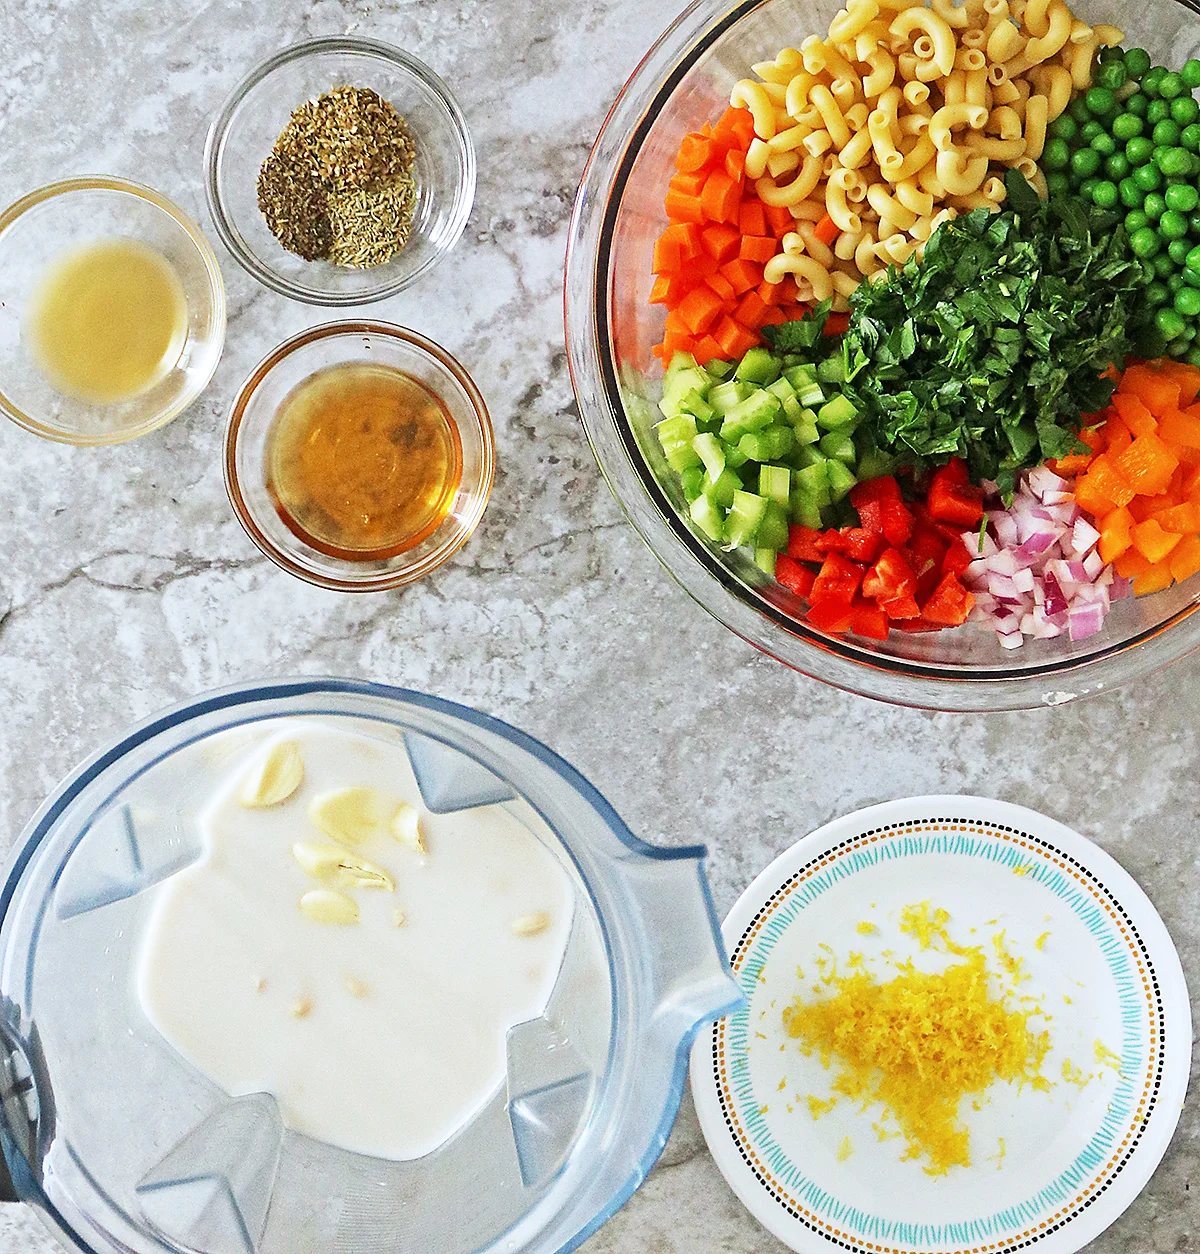 Making a crunchy creamy macaroni salad.